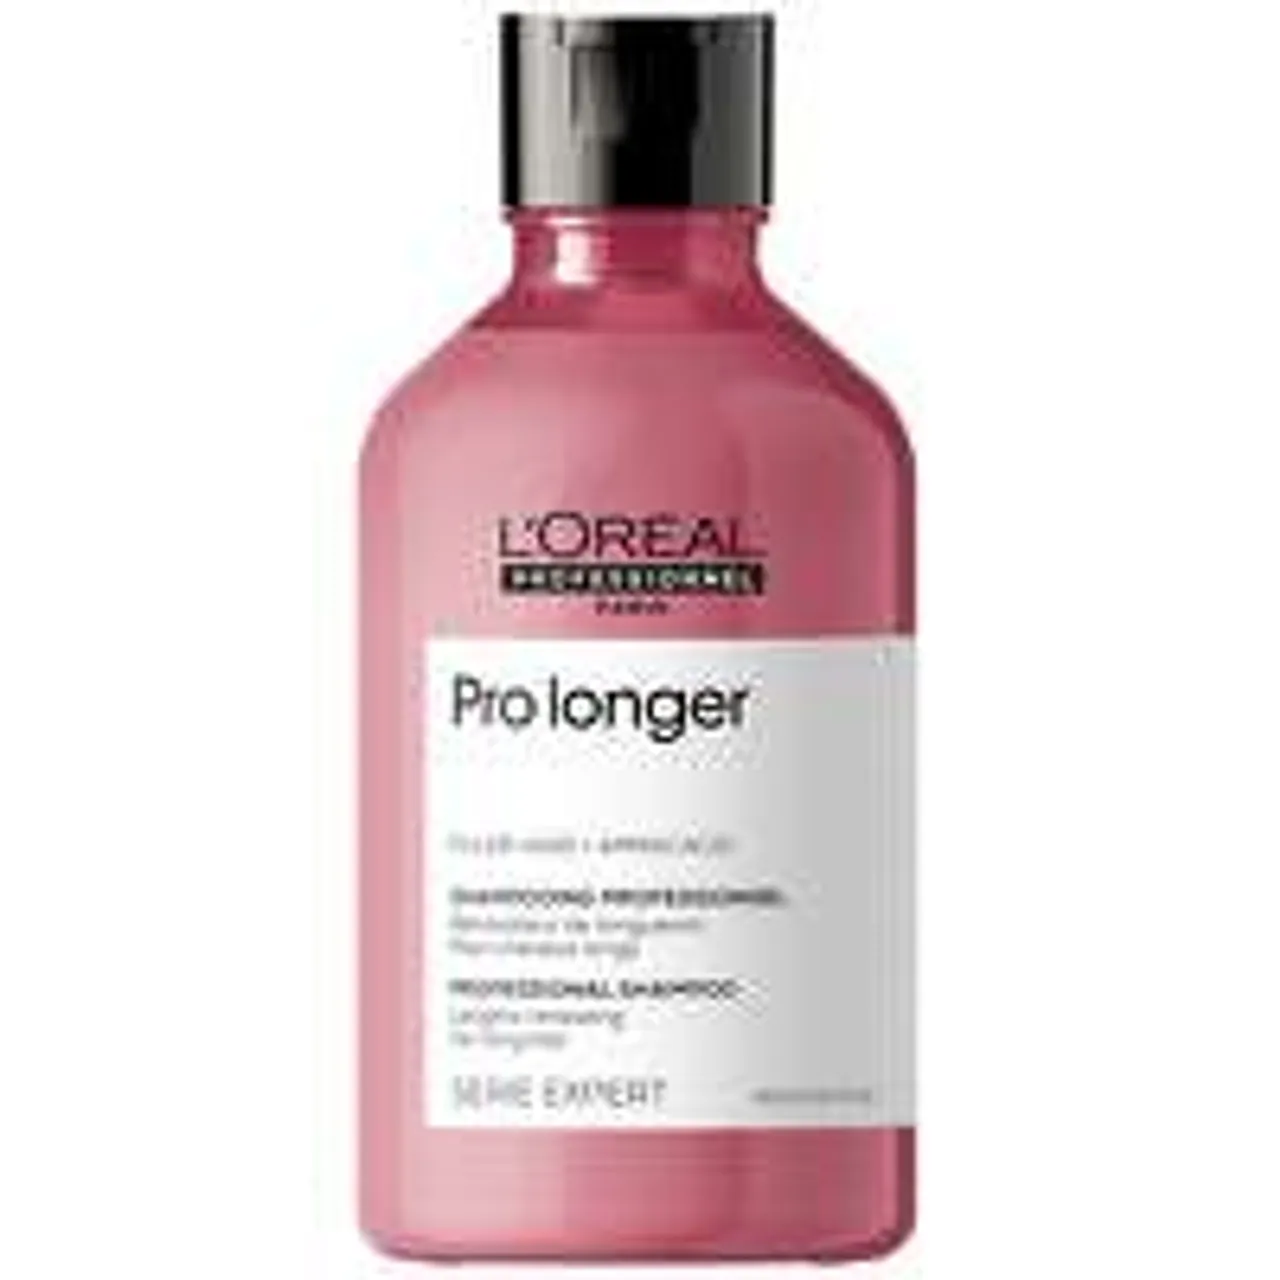 L'Oreal Professionnel SERIE EXPERT Pro Longer Shampoo 300ml